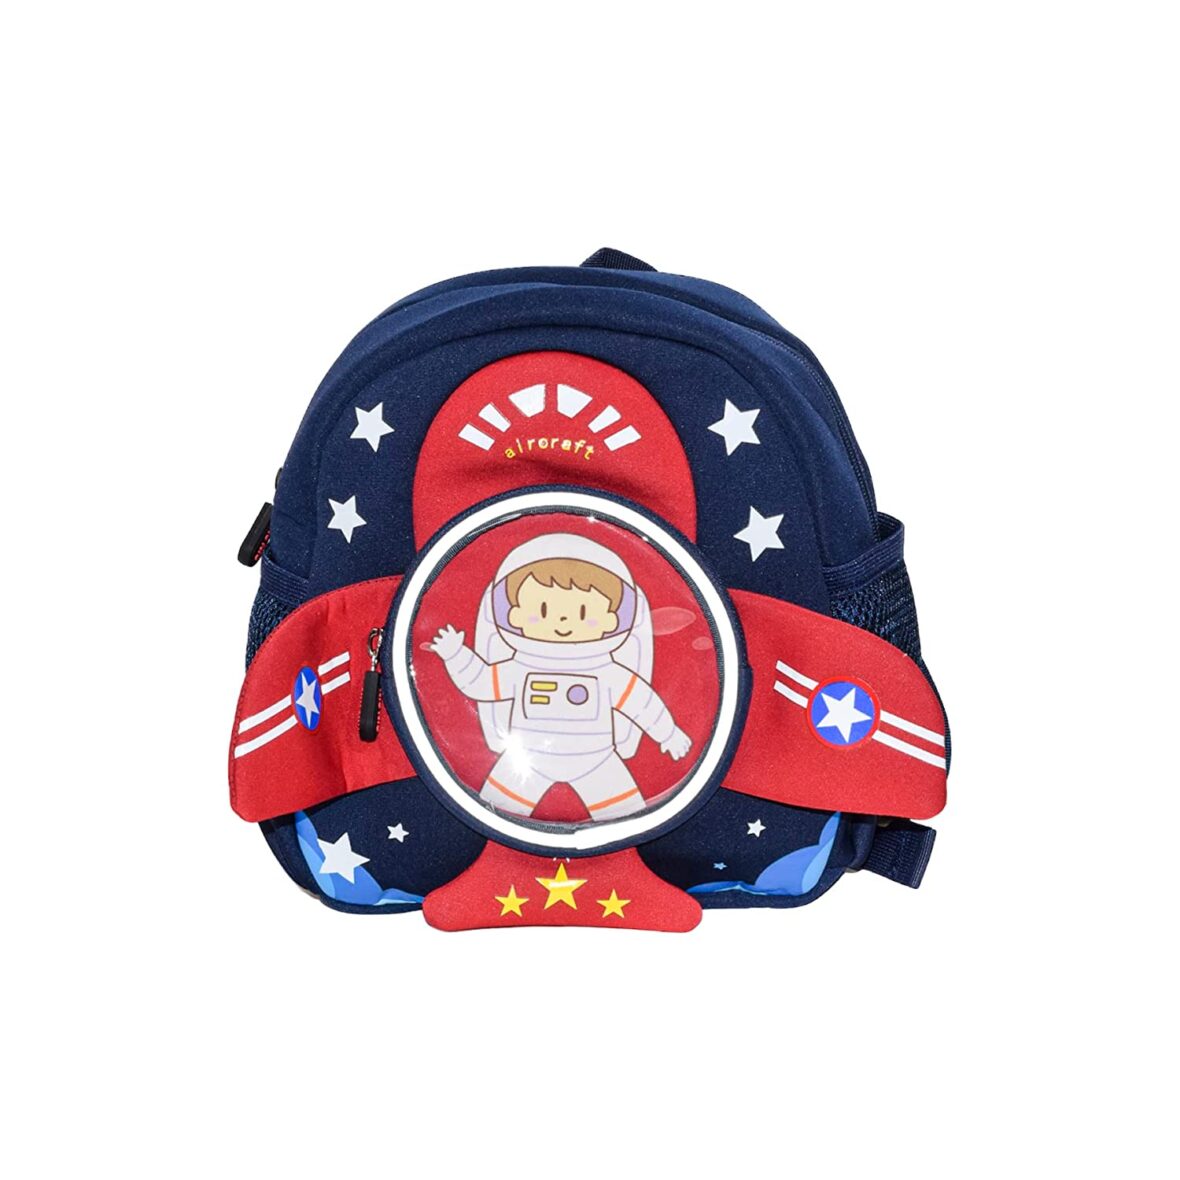 U Smile Space Design Bag for Pre-Schoolers Kids, Water Resistant Mini Backpack for Kids, Lightweight Small Size Bag for Play School & Nursery Kids, Picnic Bag, Travel, Dark Blue, 1-4 Years